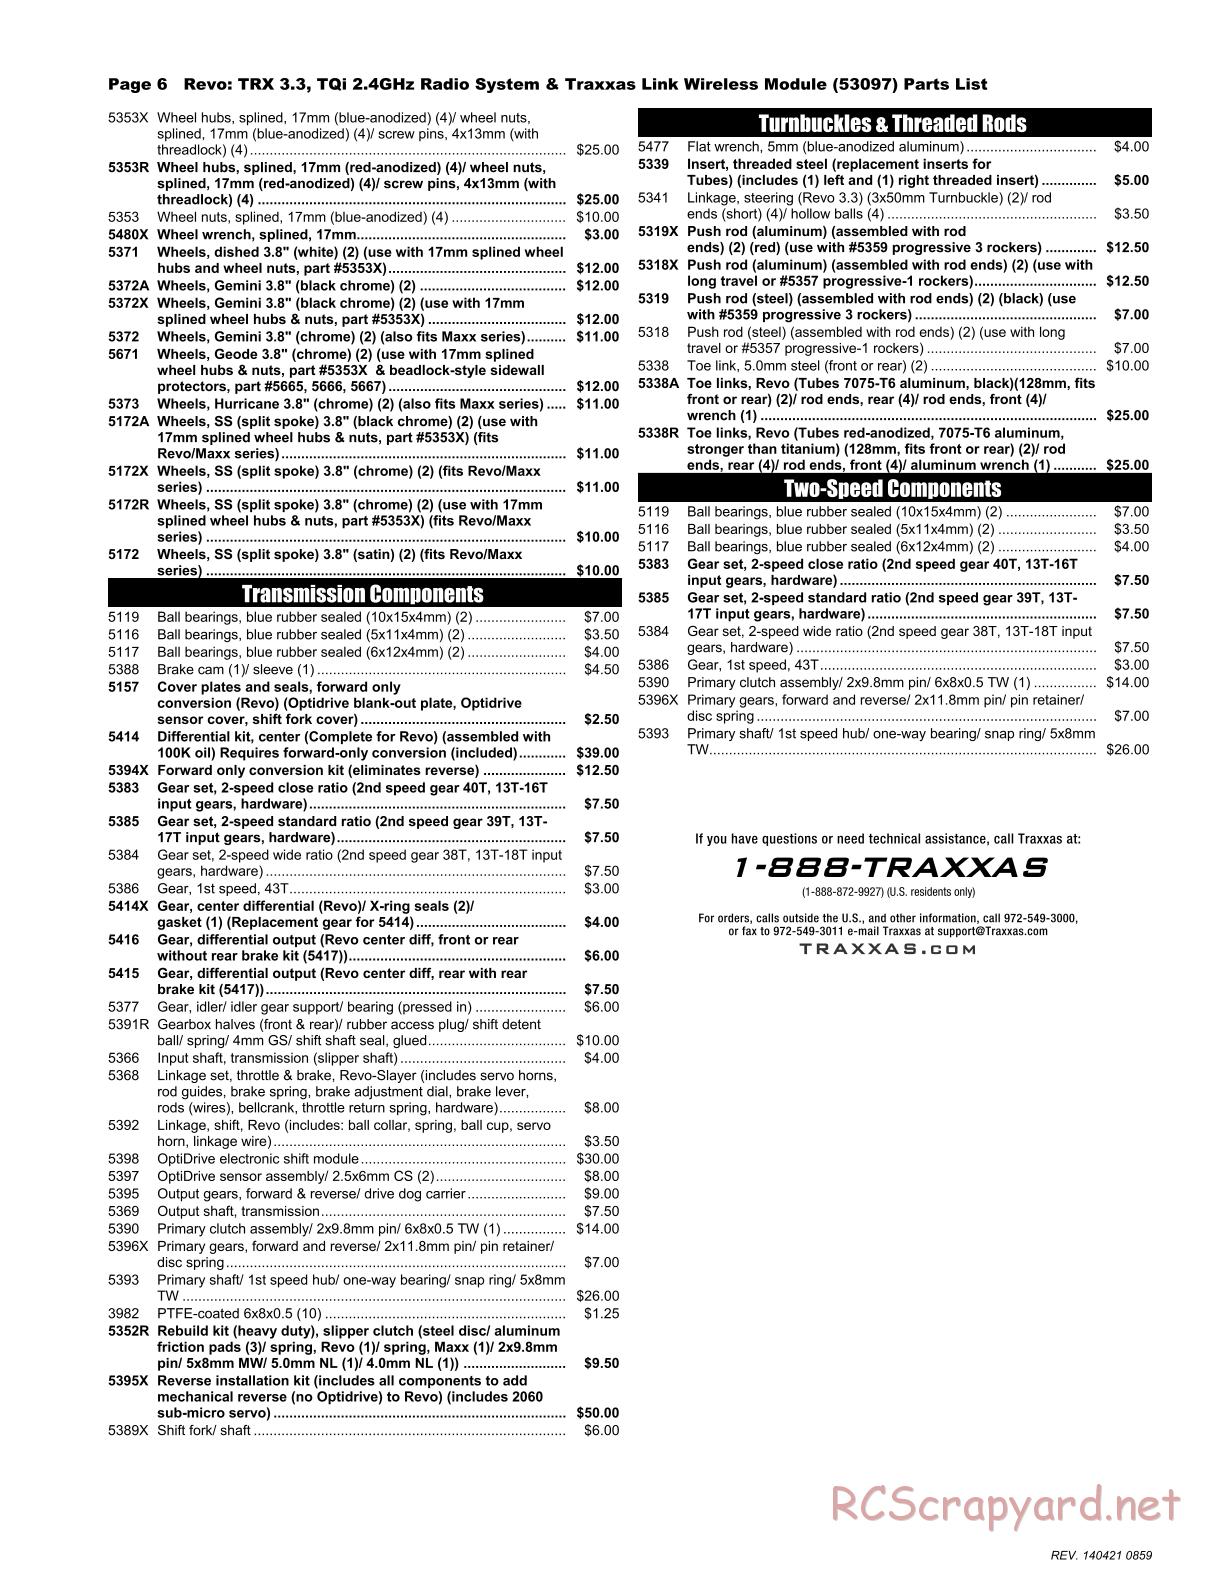 Traxxas - Revo 3.3 (2014) - Parts List - Page 6